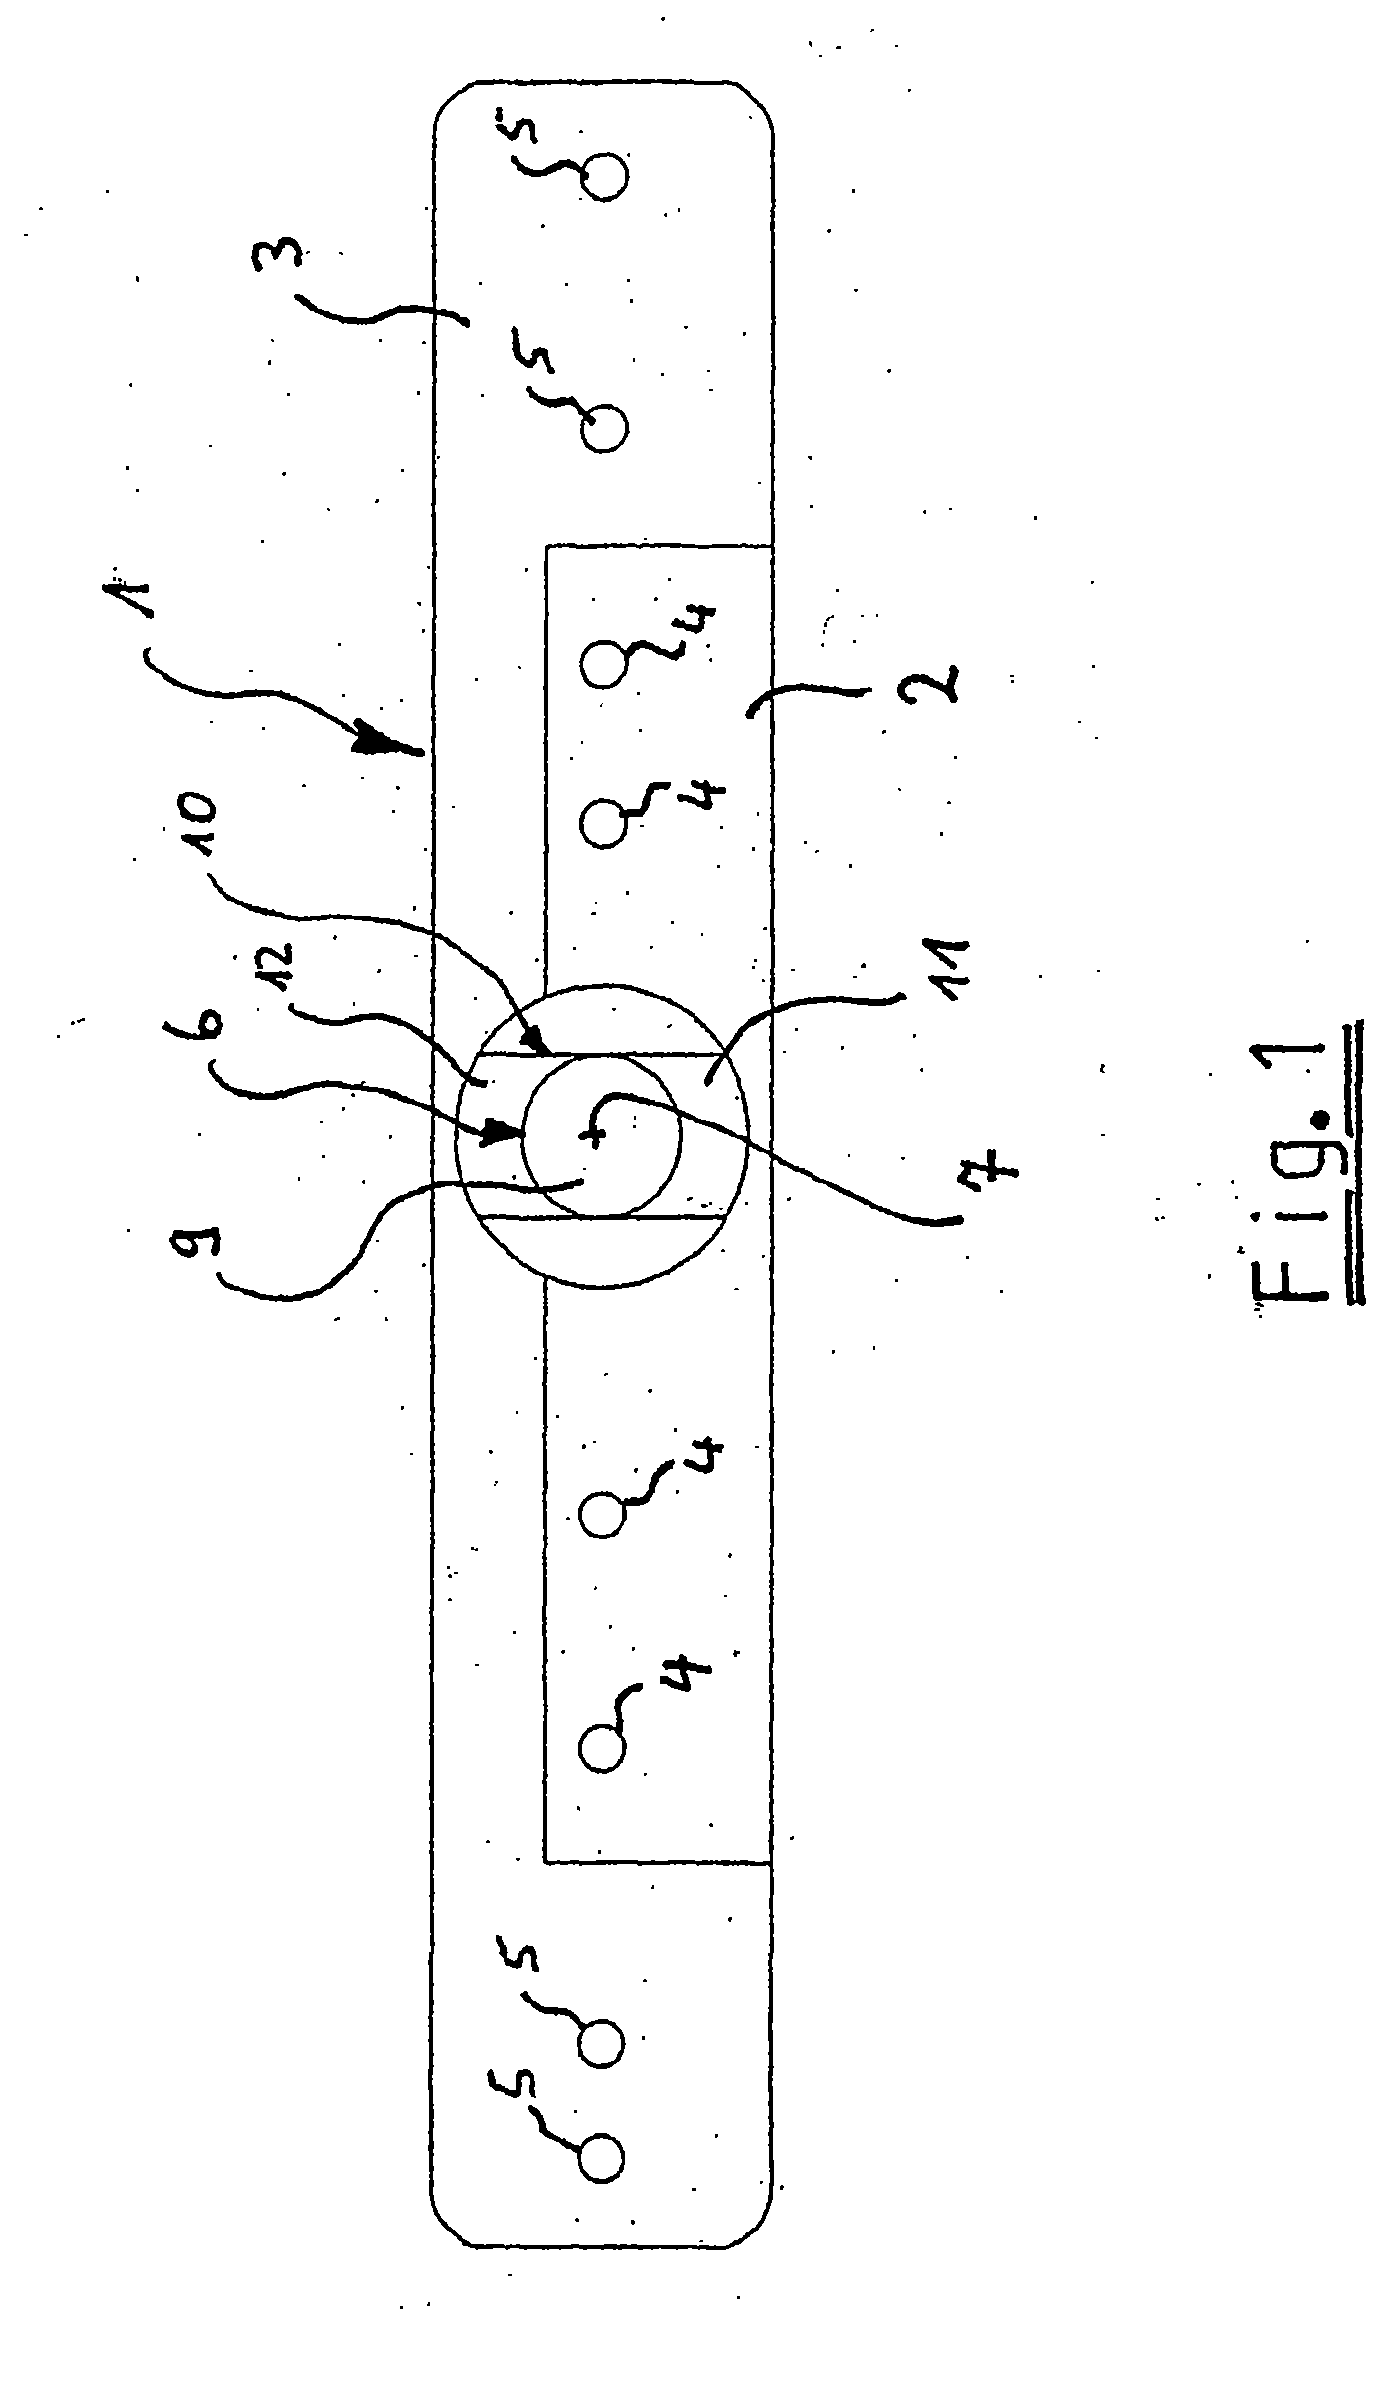 Dishwasher comprising a circulating pump